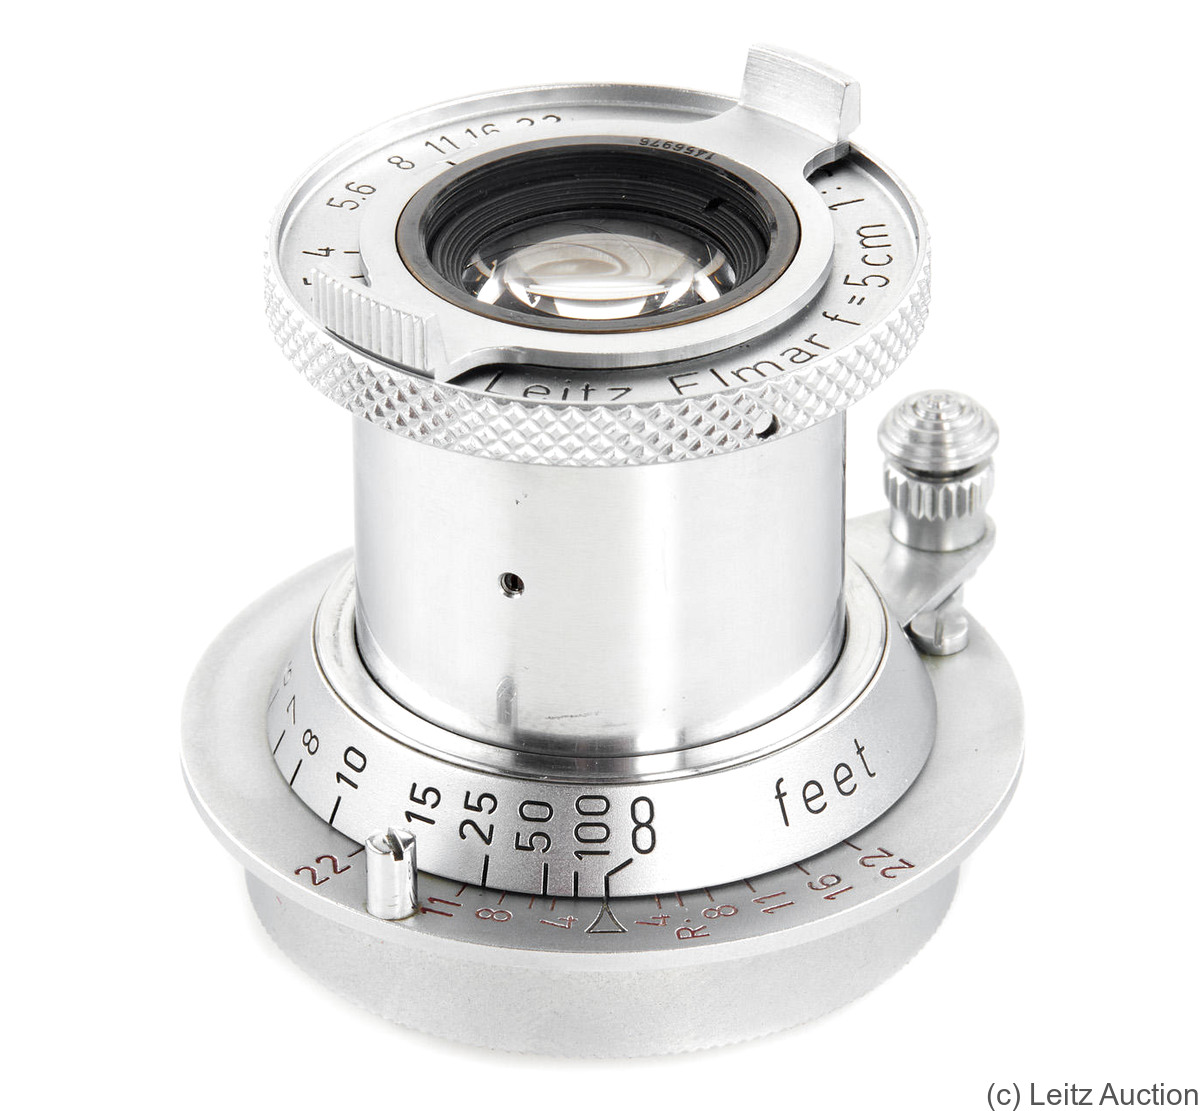 Leitz: 50mm (5cm) f3.5 Elmar (SM, chrome, red scale, prototype) camera